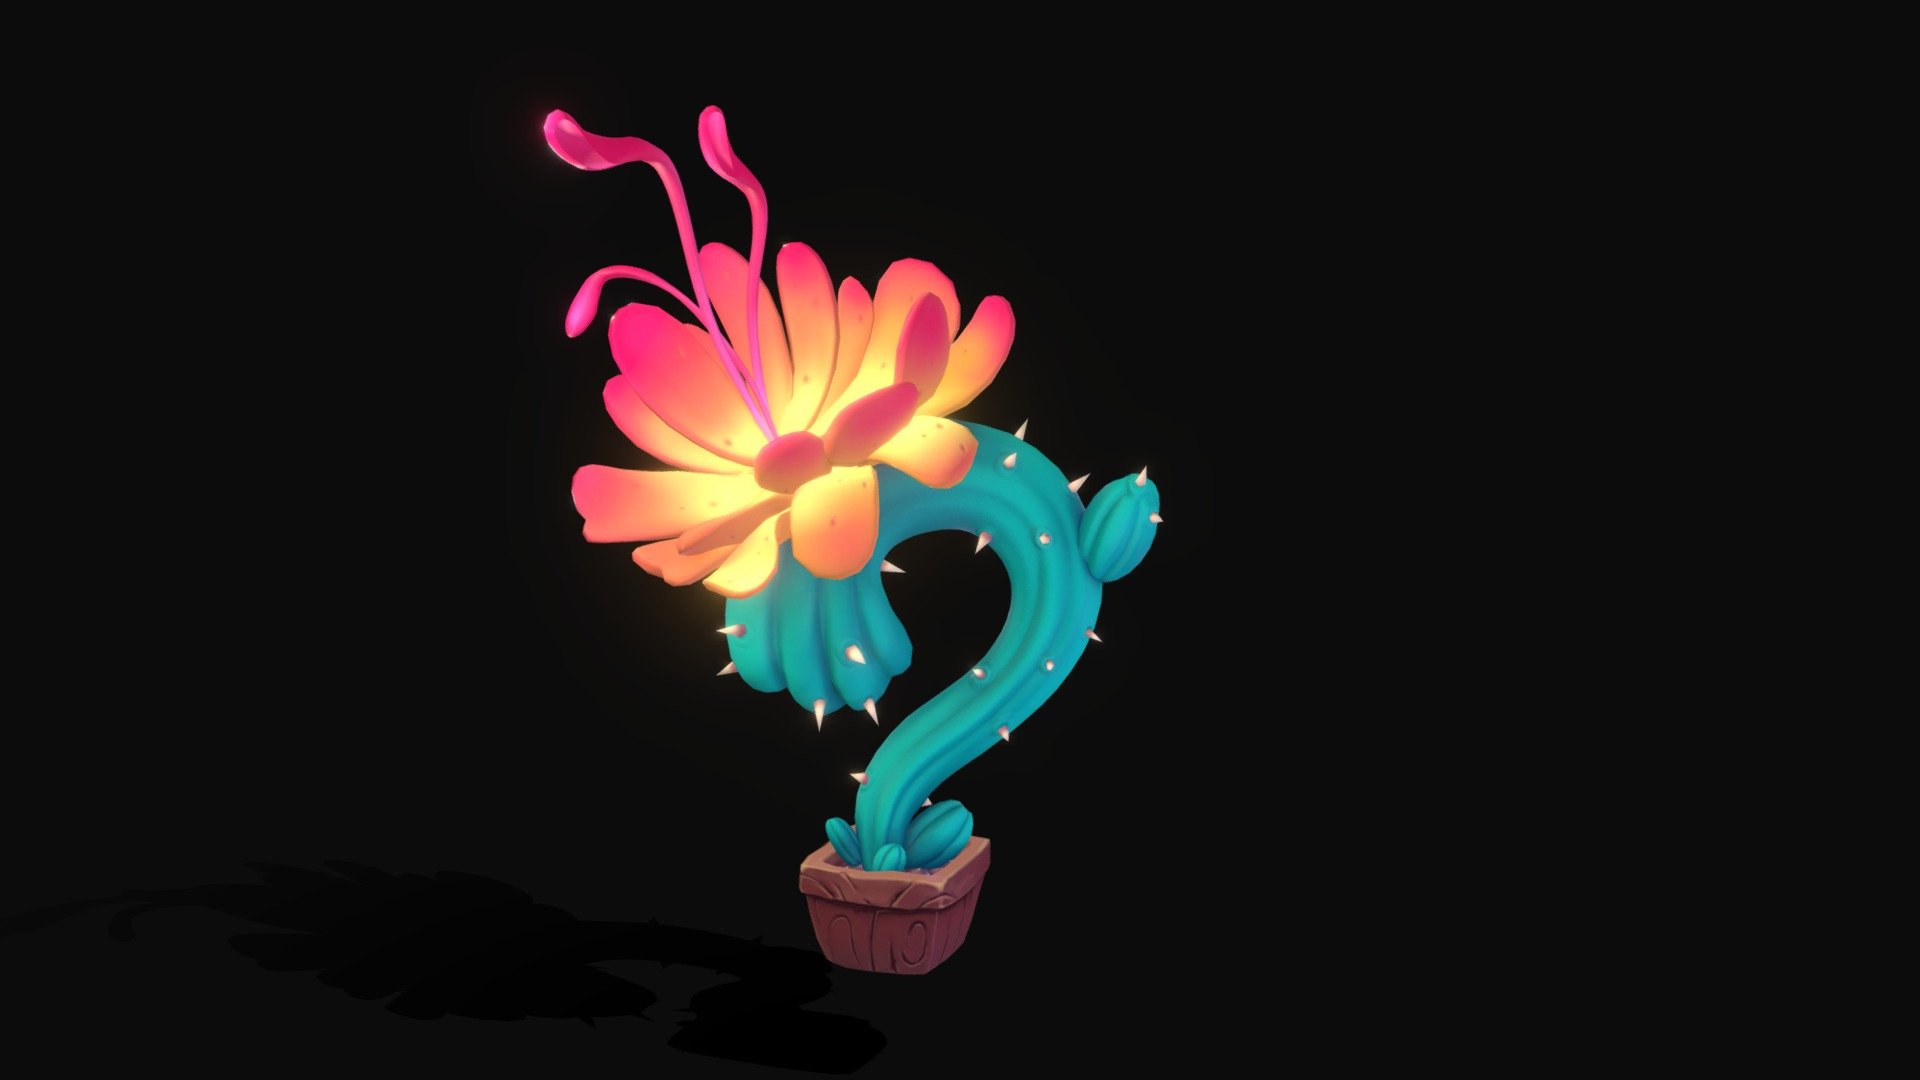 The model is made according to the concept:
https://www.artstation.com/artwork/aRQZ90 - Cactus Flower - 3D model by CG_nevik 3d model